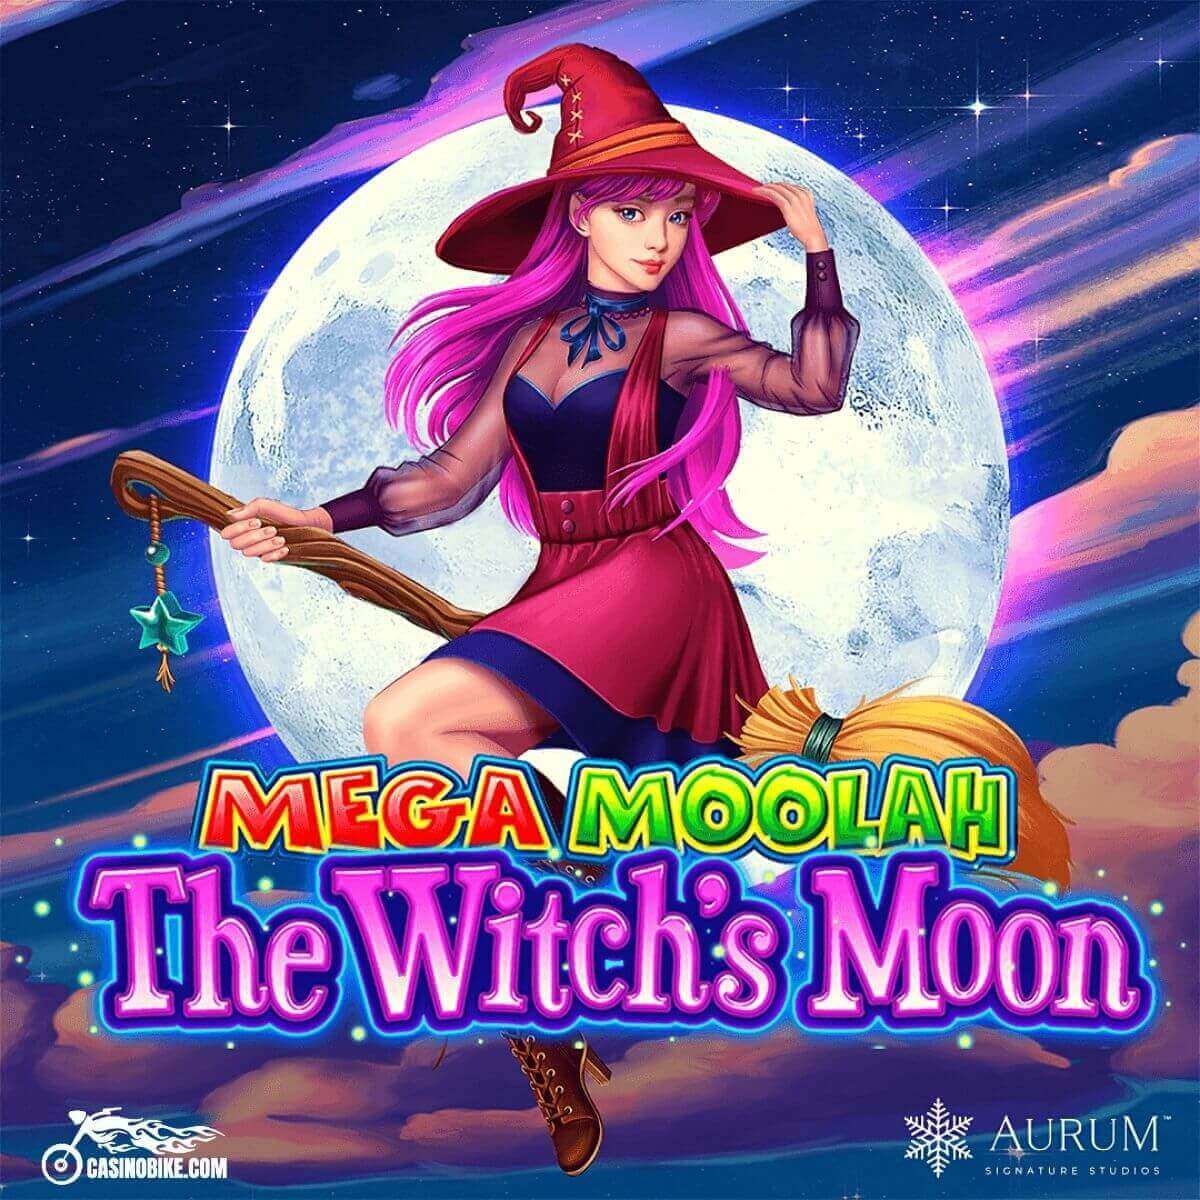 Mega Moolah The Witch’s Moon Slot by Aurum Signature Studios